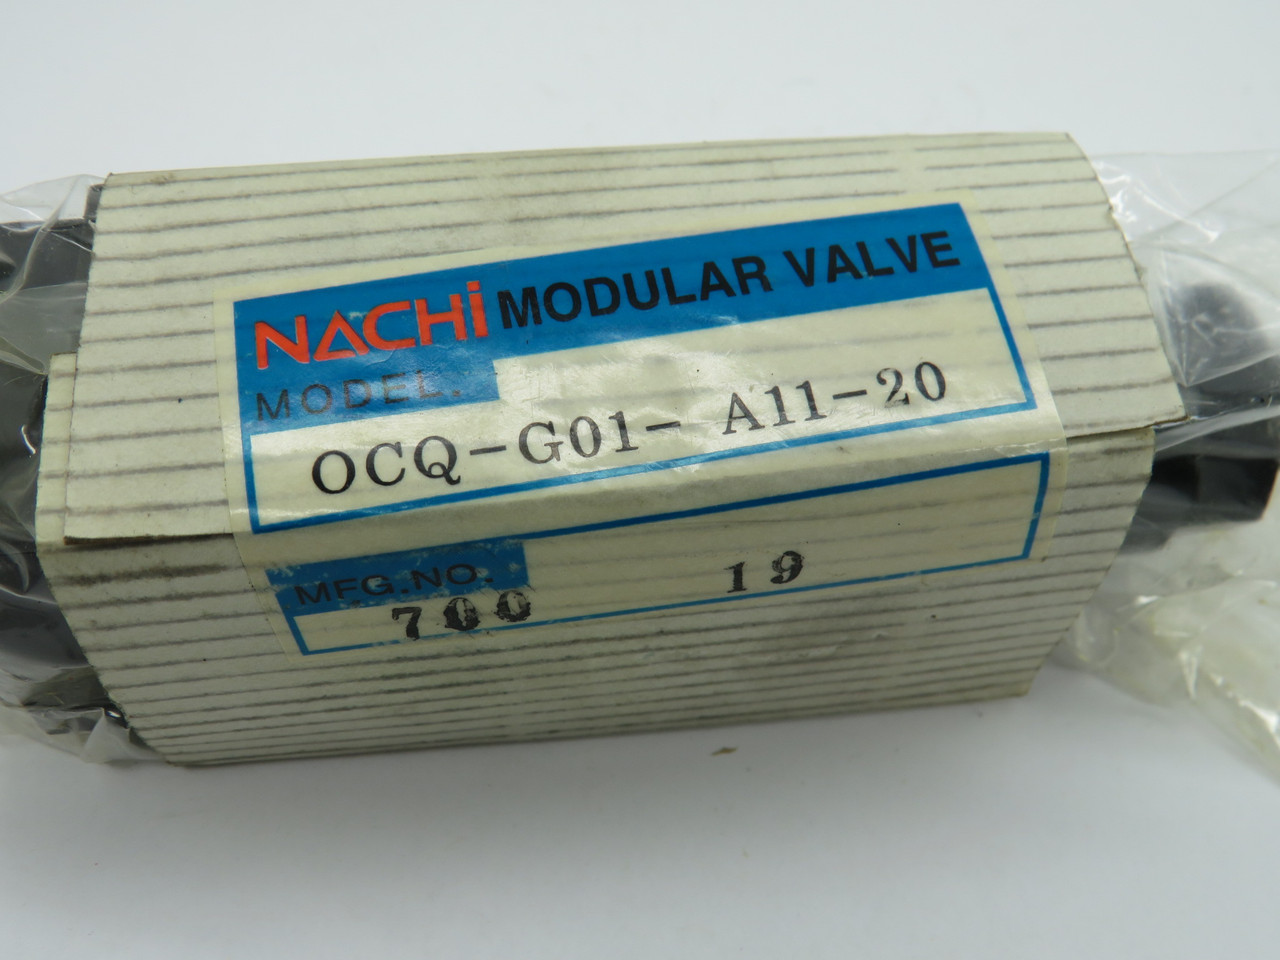 Nachi OCQ-G01-A11-20 Modular Valve NEW